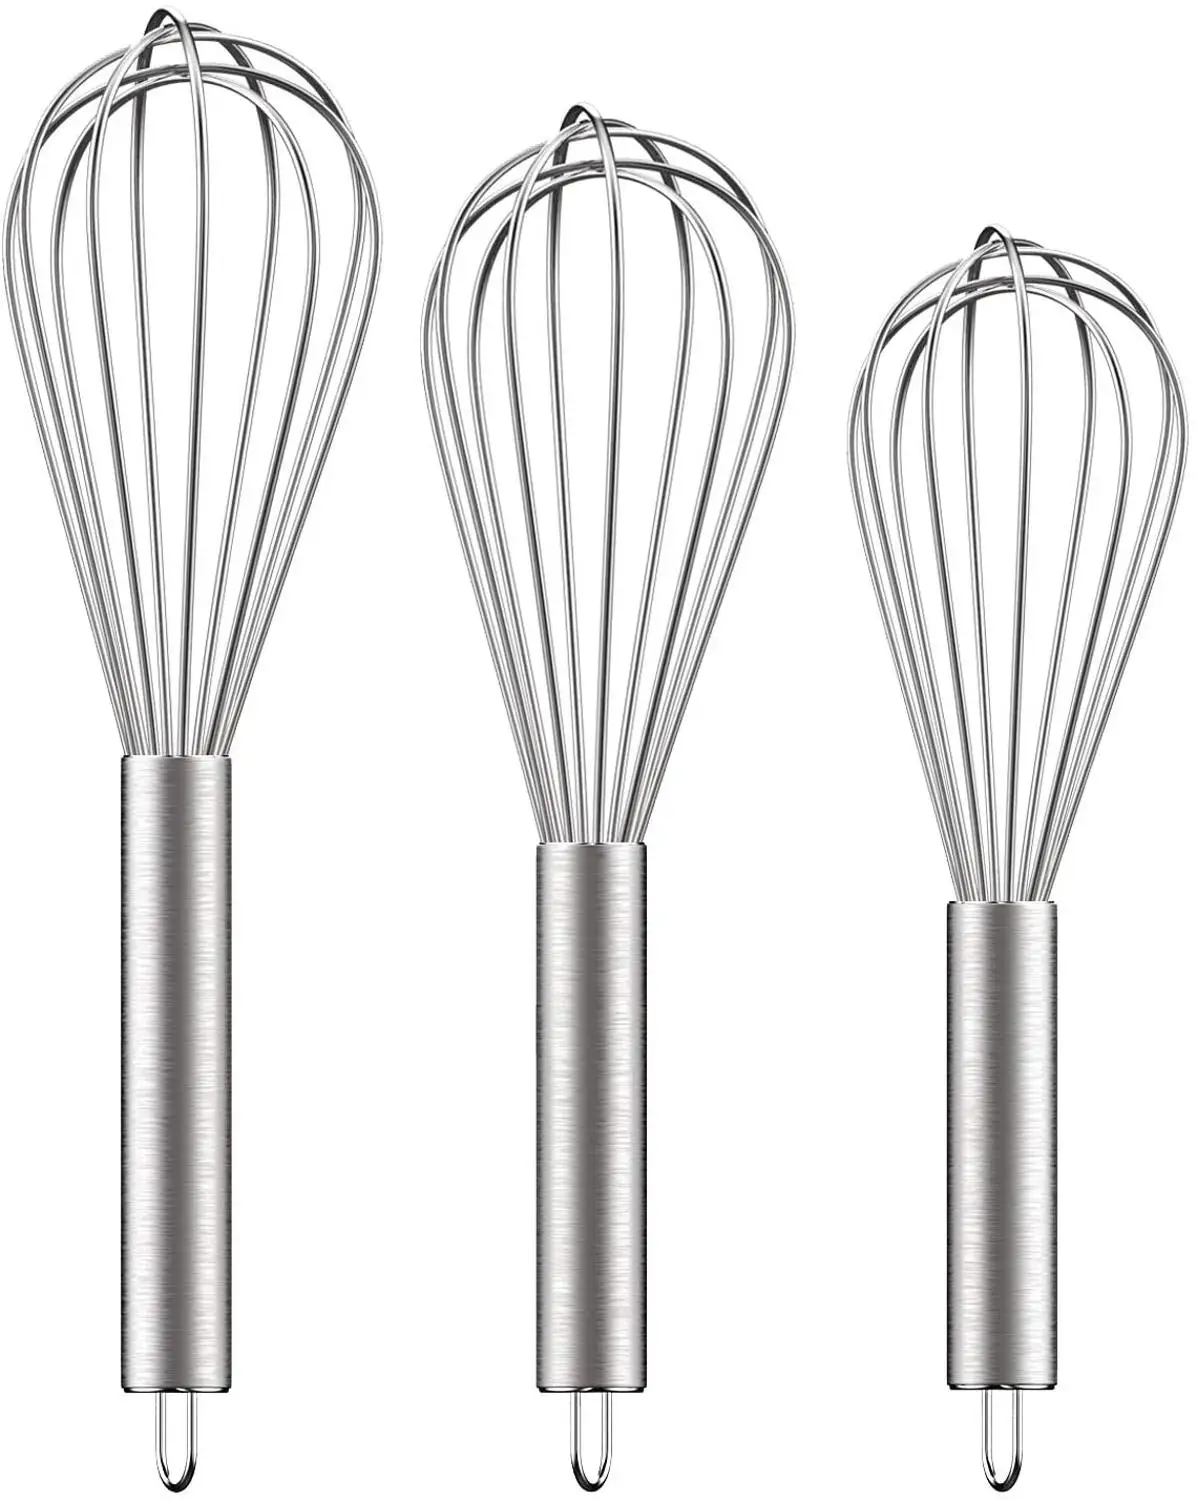 https://ae01.alicdn.com/kf/H628bb84878f54520ae07aec562c21d48W/3-Pack-Stainless-Steel-Whisks-Wire-Whisk-Set-Kitchen-wisks-for-Cooking-Blending-Whisking-Beating-Stirring.jpg